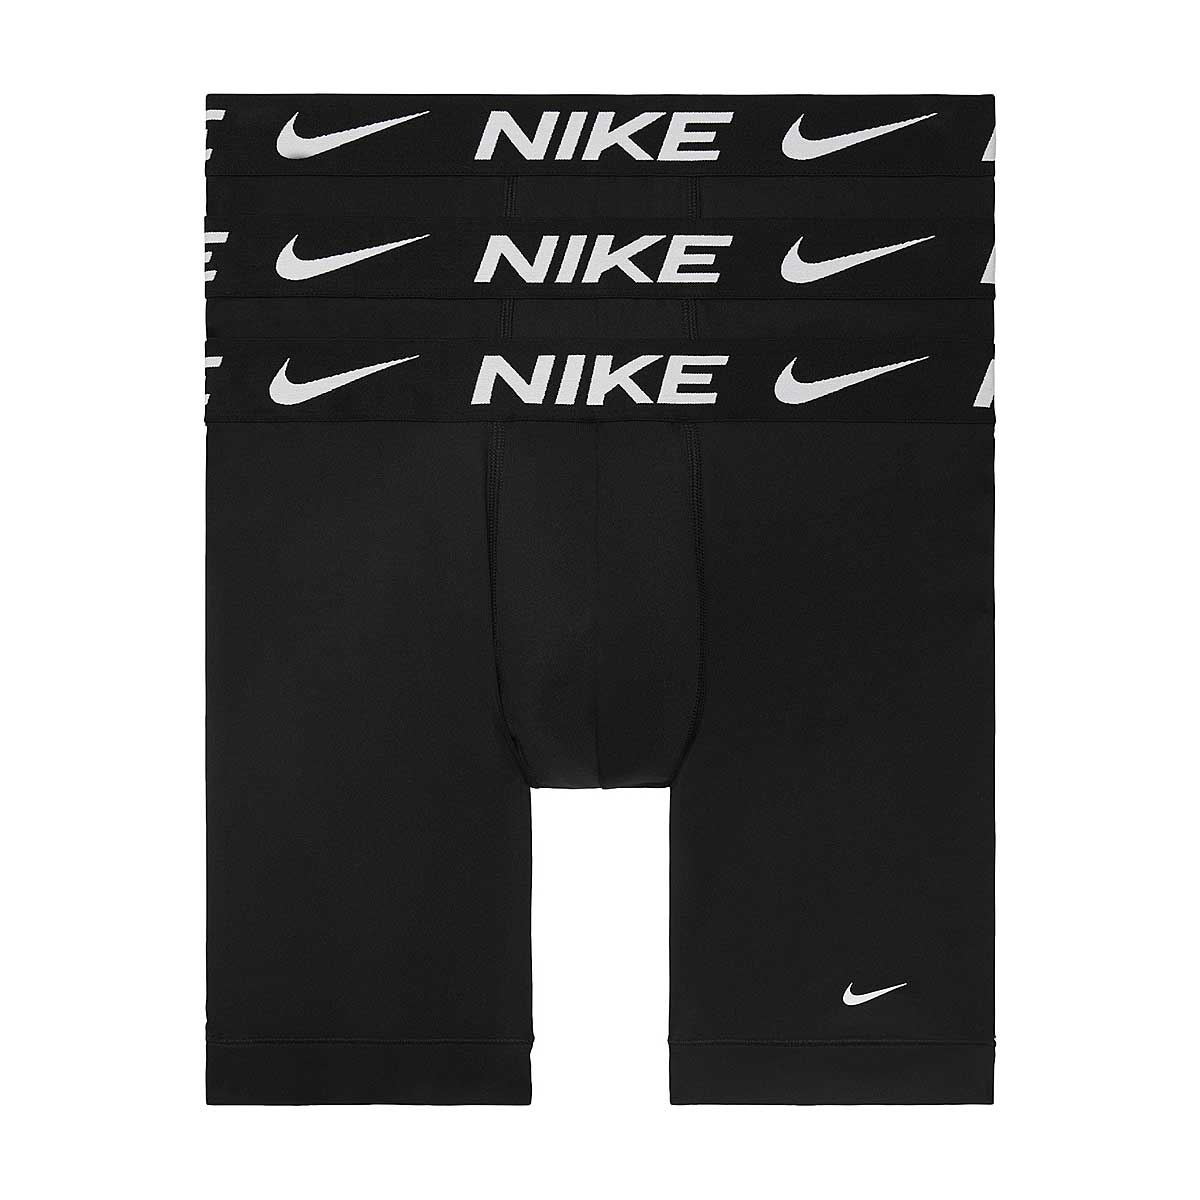 Nike Boxer Brief Long 3Pk, Black/Black/Black